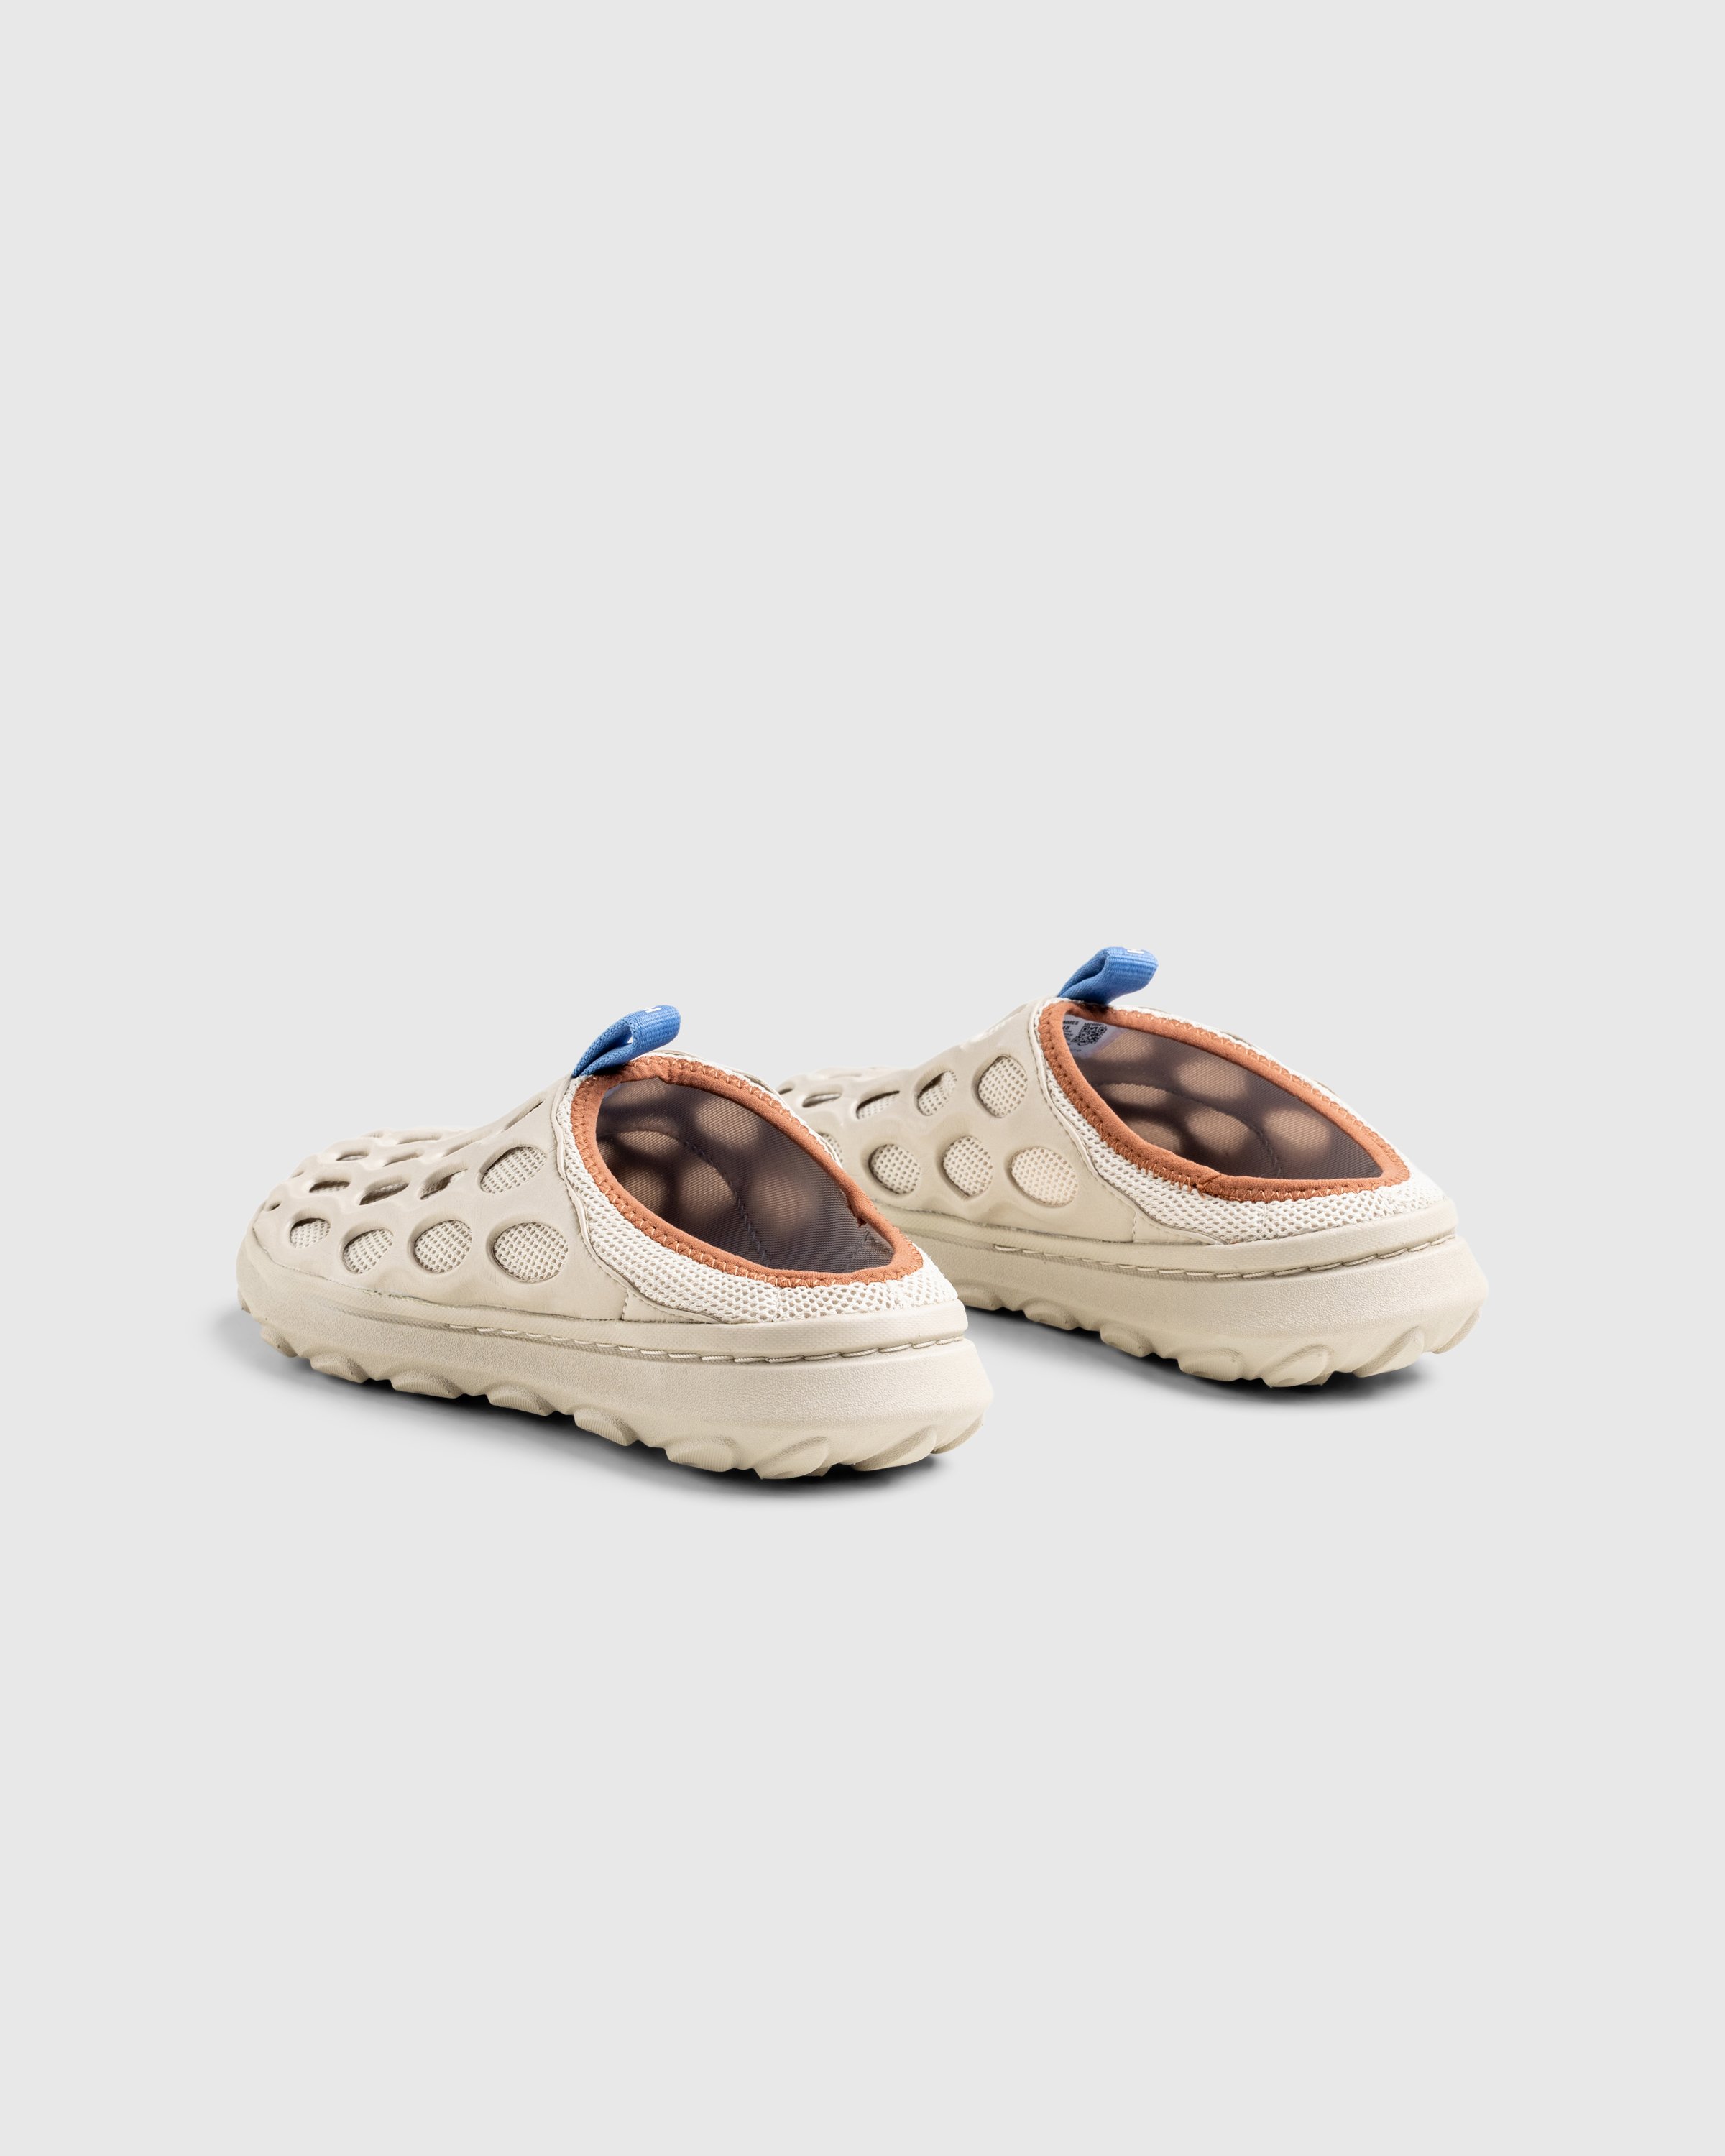 Merrell x Highsnobiety - Womens Hydro Mule Peyote - Footwear - Beige - Image 4